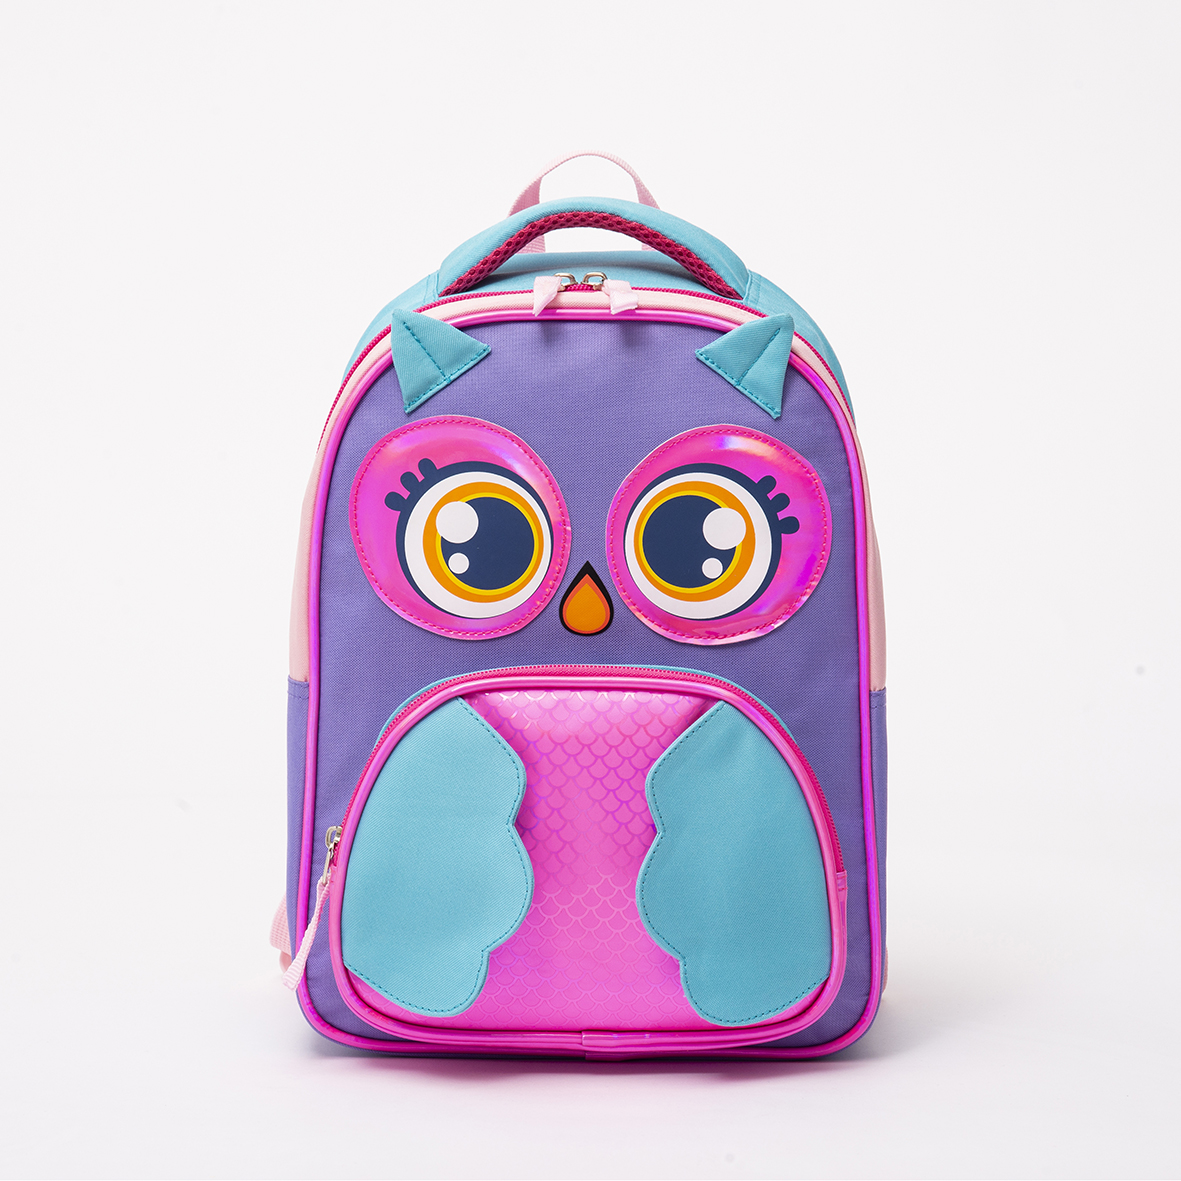 OEM Customized Baby Diaper Backpack - New design cute stereoscopic purple owl kids bag – Twinkling Star